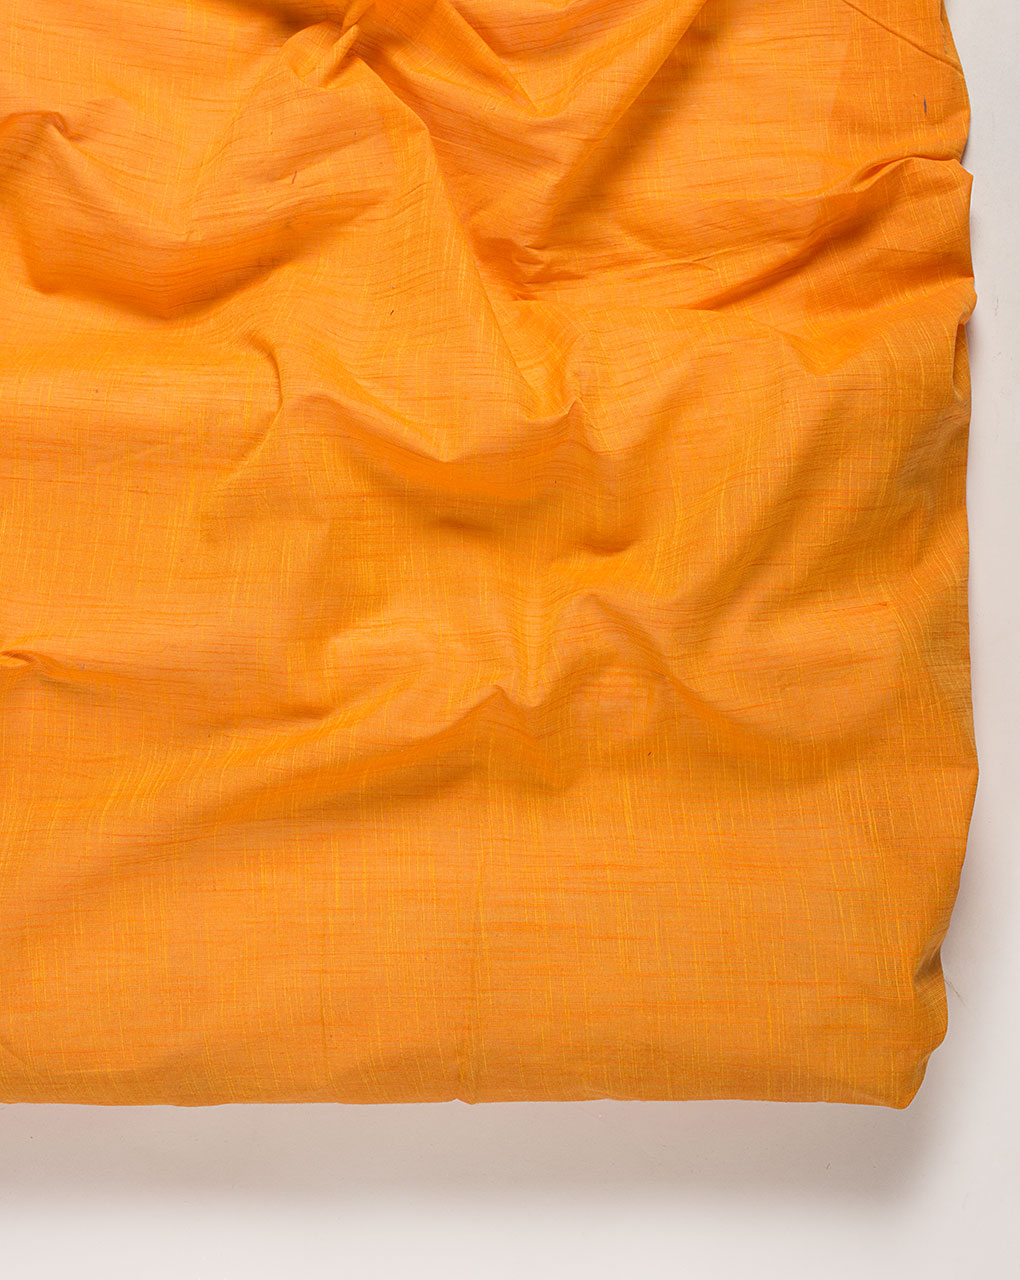 Orange Plain Woven Loom Textured Cotton Fabric